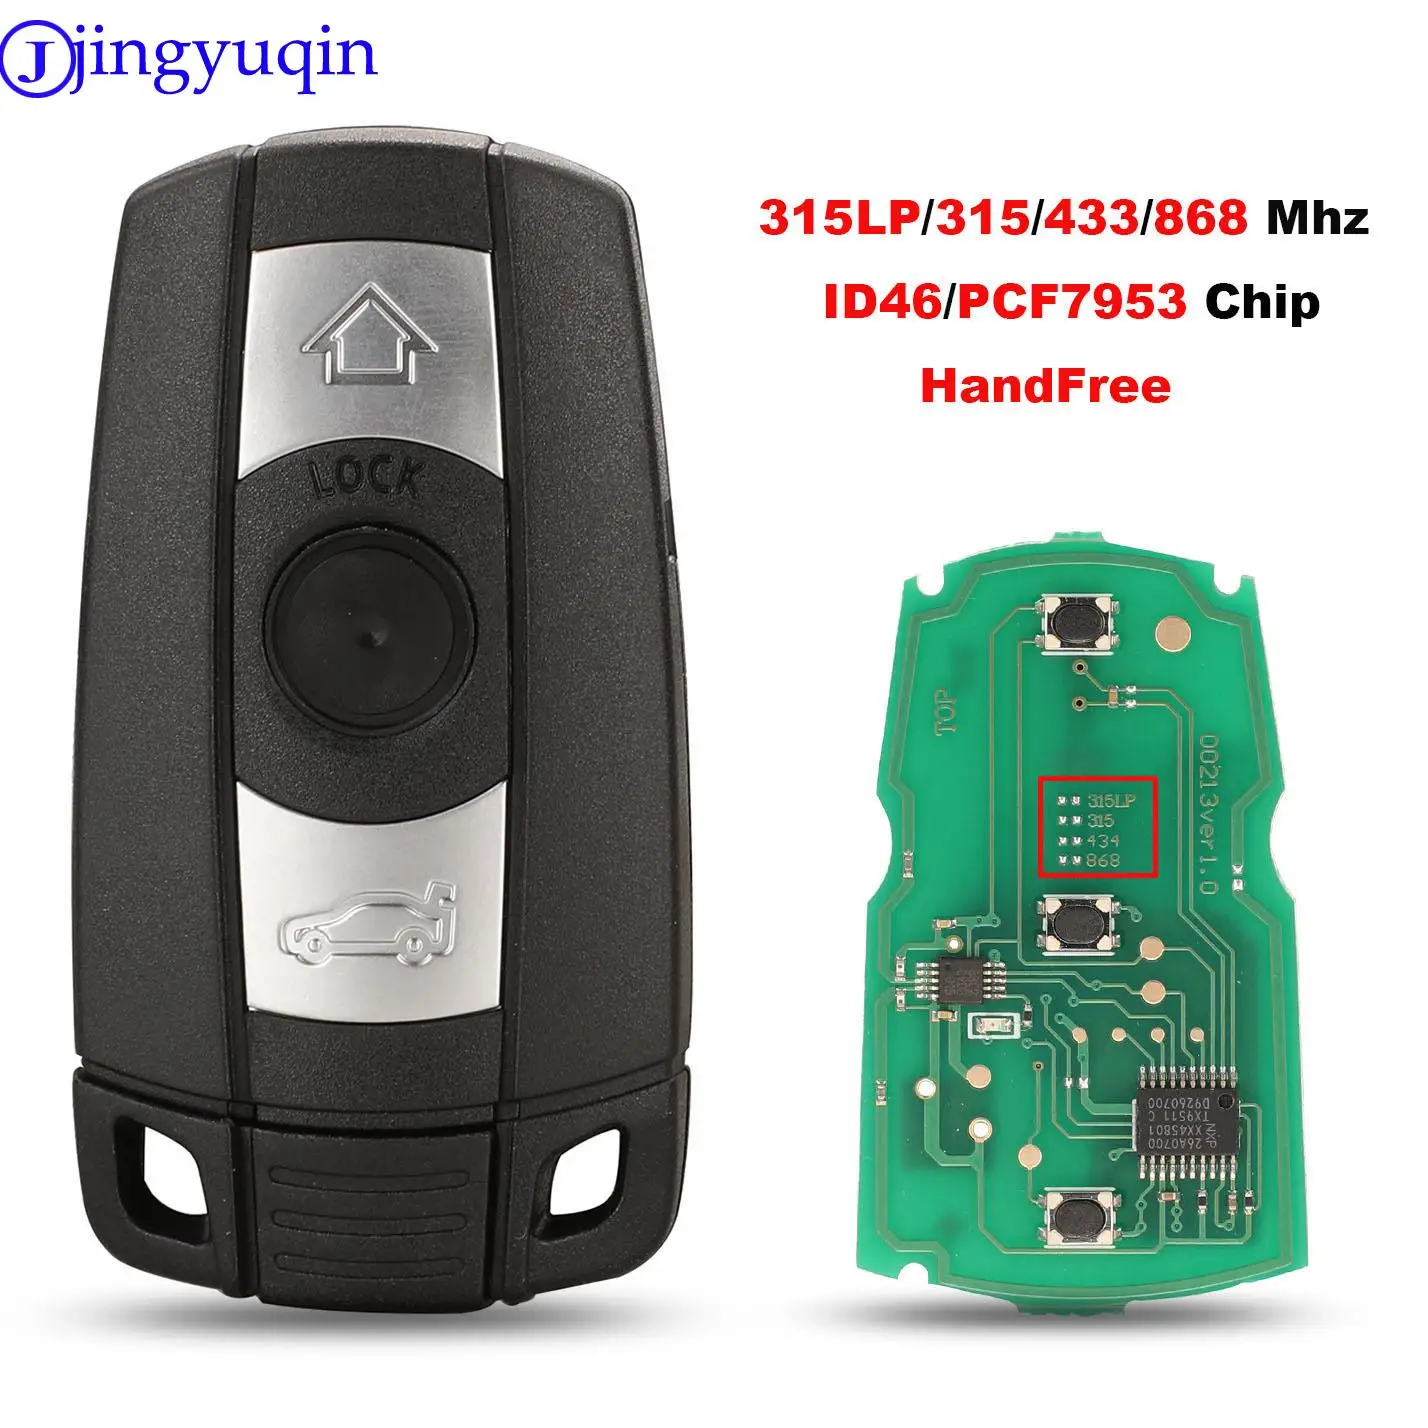 jingyuqin 3 Buttons Remote Car Key 315LP/315/433/868 MHZ CAS3 CAS5 For BMW 3 5 Series X5 X6 Z4 Smart Key Control Handfree